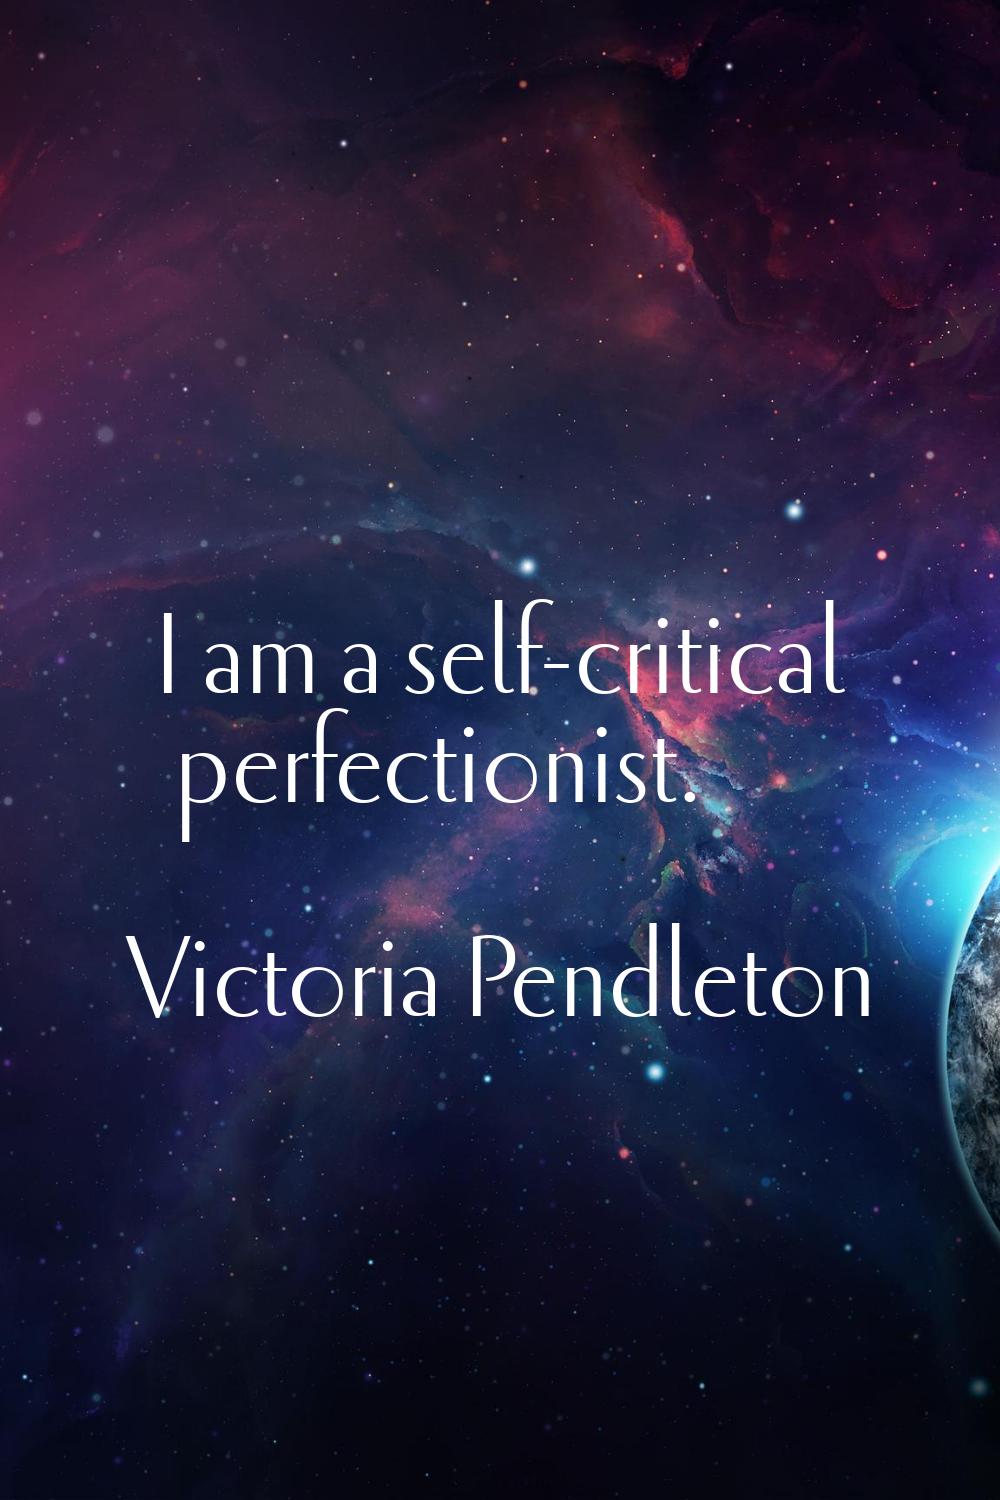 I am a self-critical perfectionist.